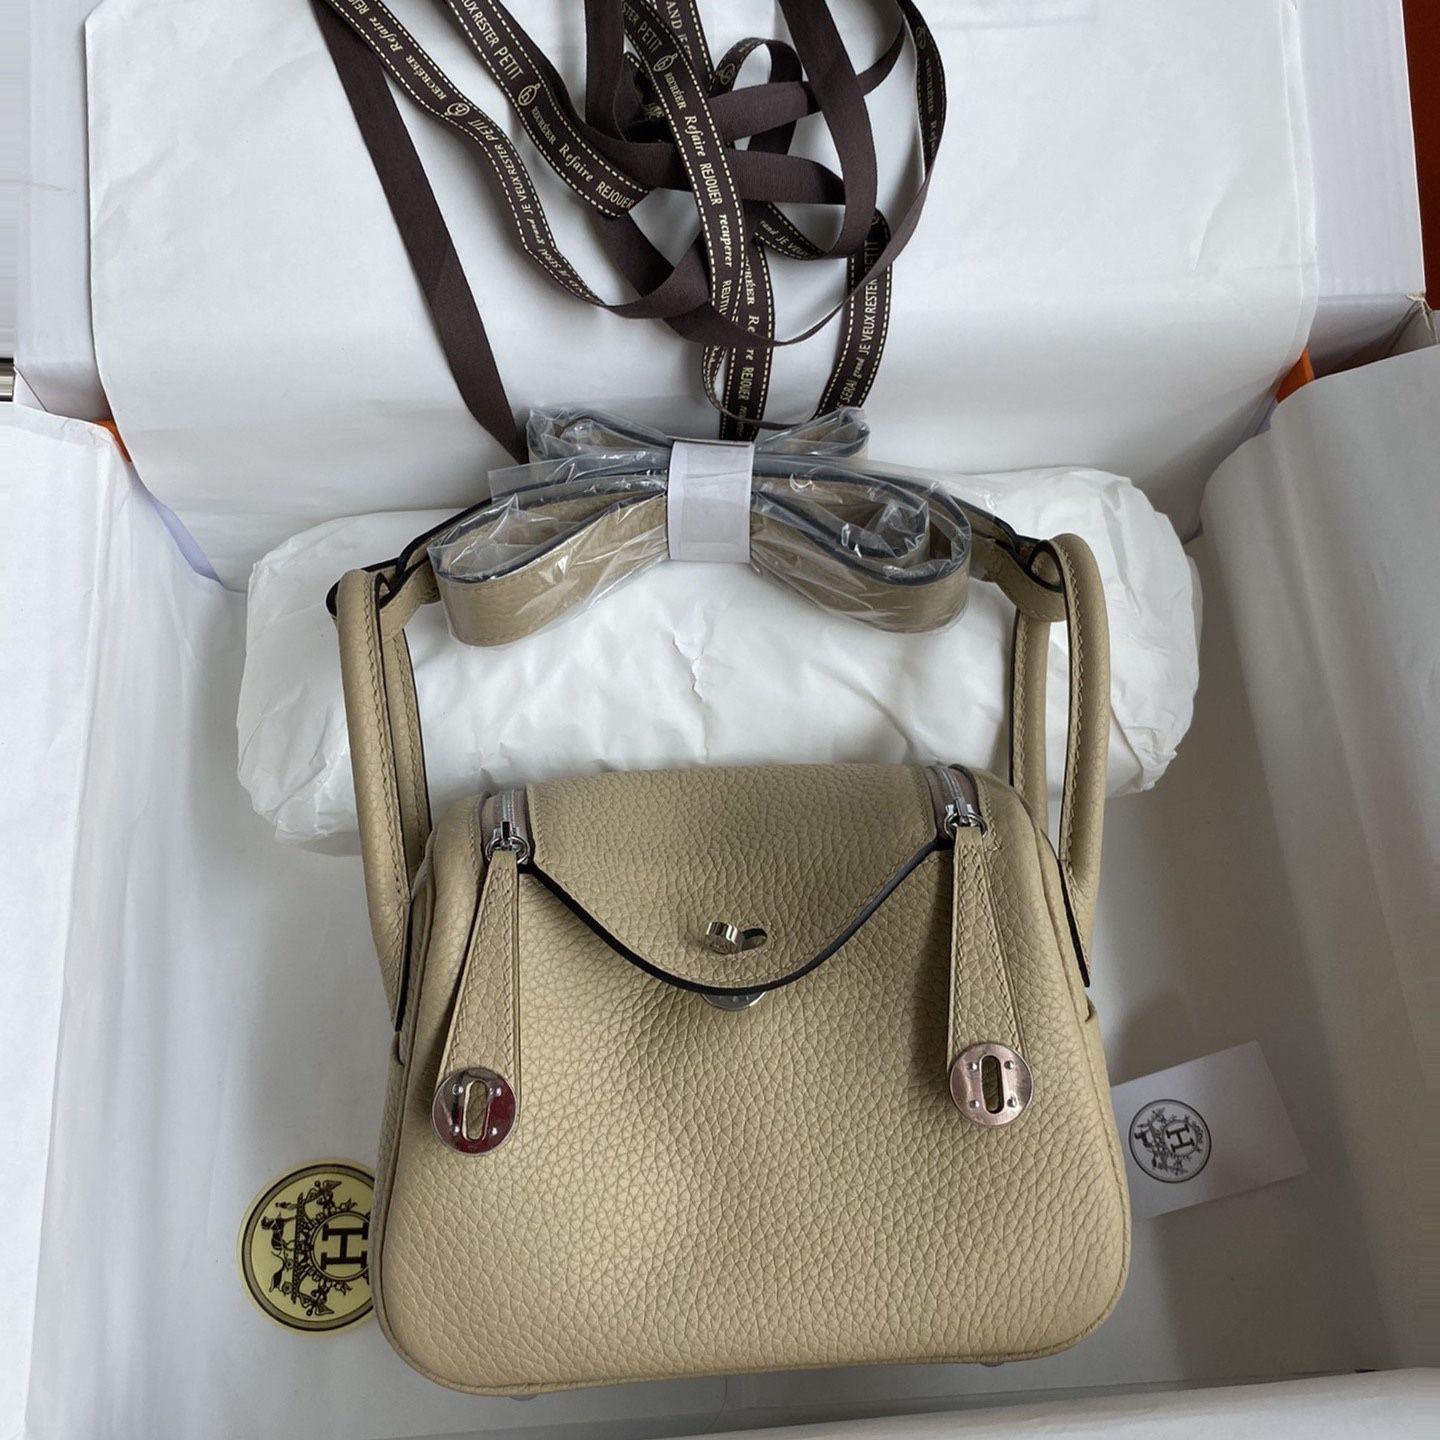 Thought on my new Hermes Lindy 26 bag? : r/handbags